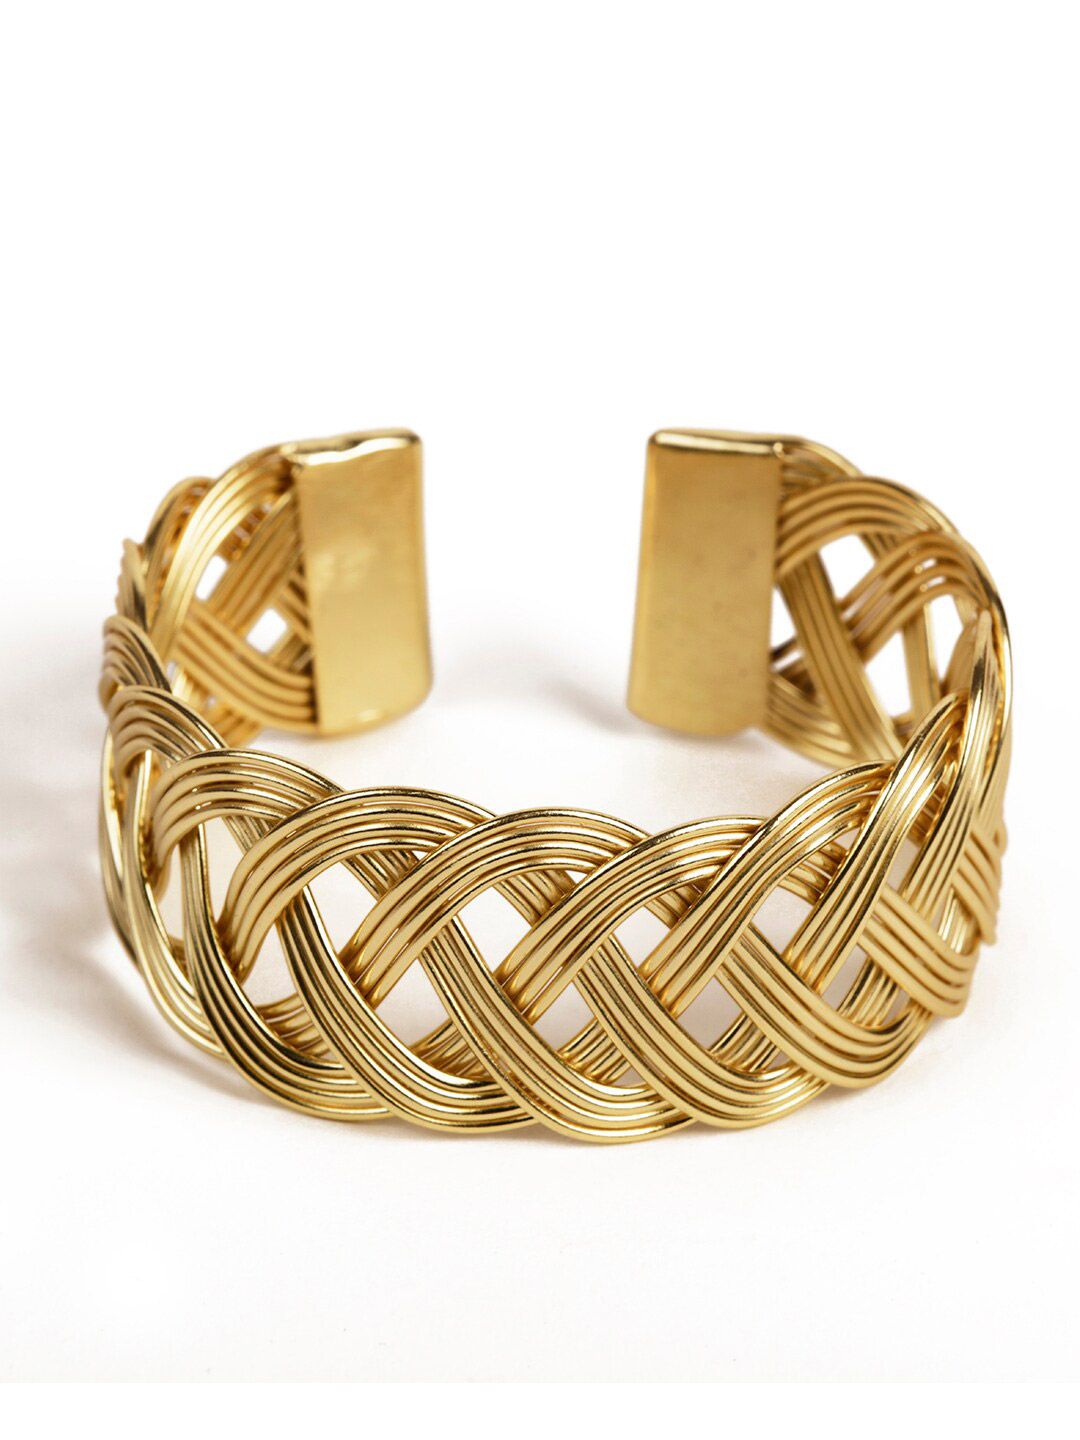 STILSKII Unisex Gold-Toned Brass Gold-Plated Bangle-Style Bracelet Price in India